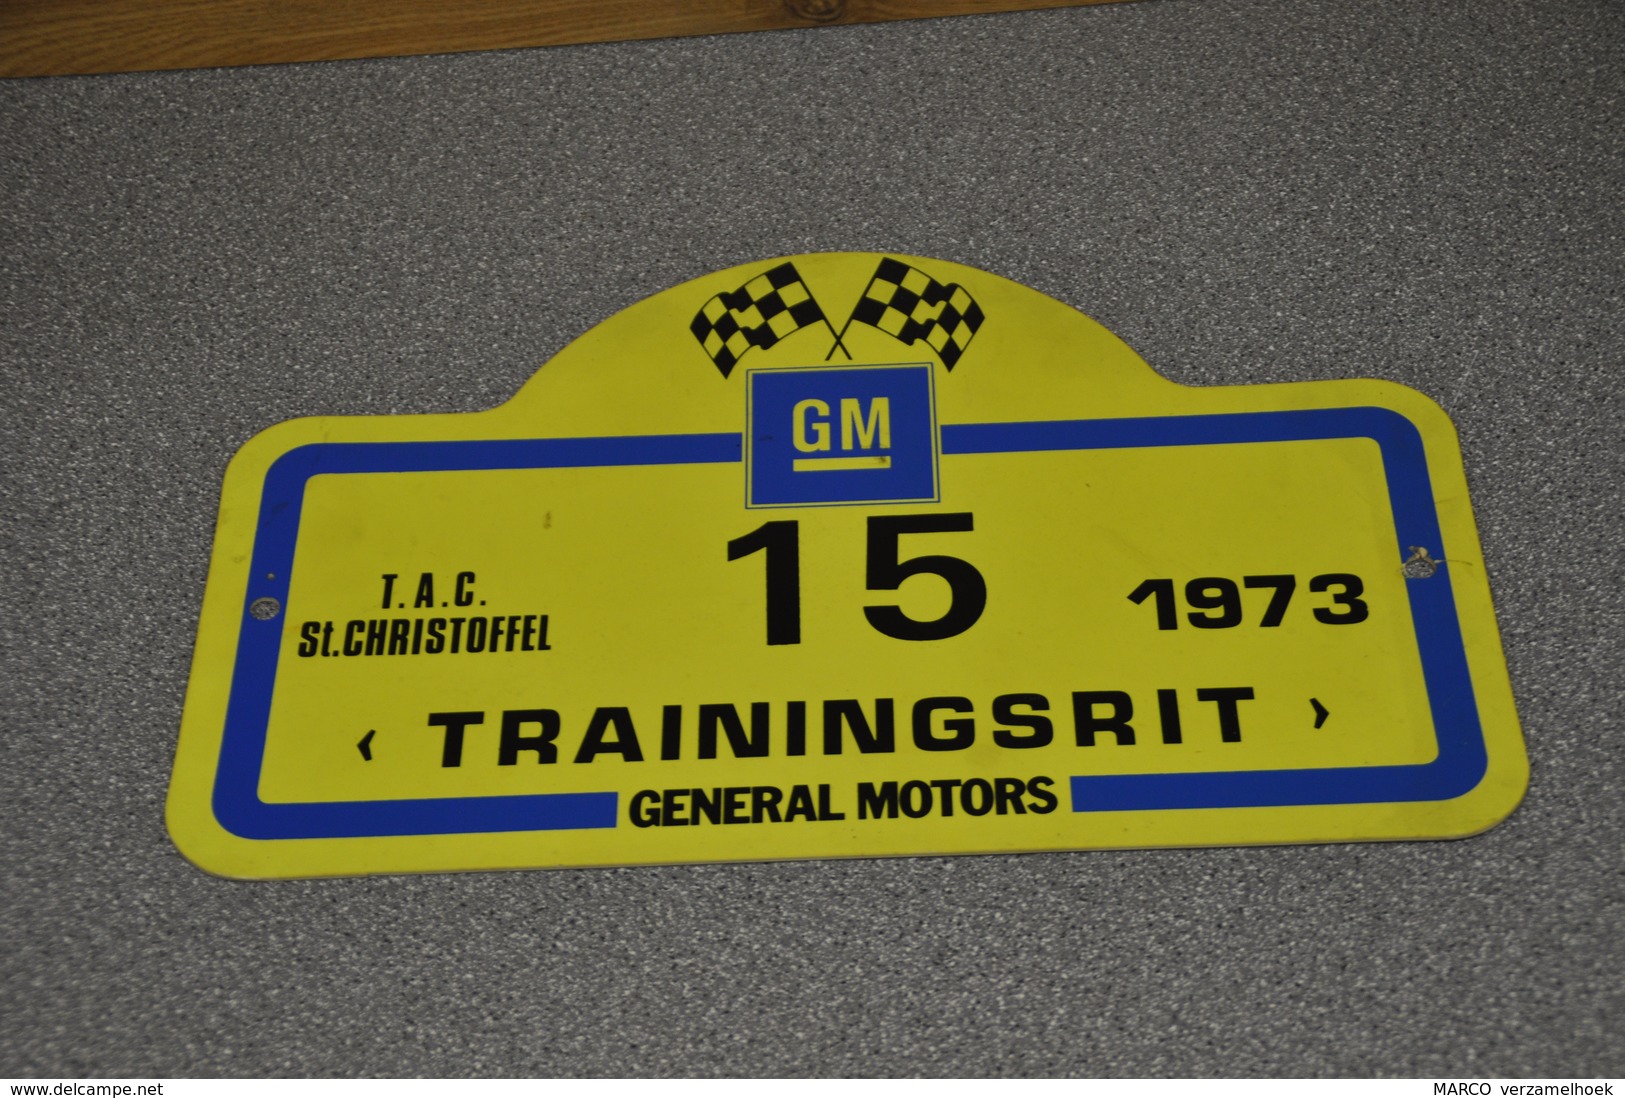 Rally Plaat-rallye Plaque Plastic: Trainingsrit Tilburgse Automobielclub 1973 GM General Motors - Rallyeschilder